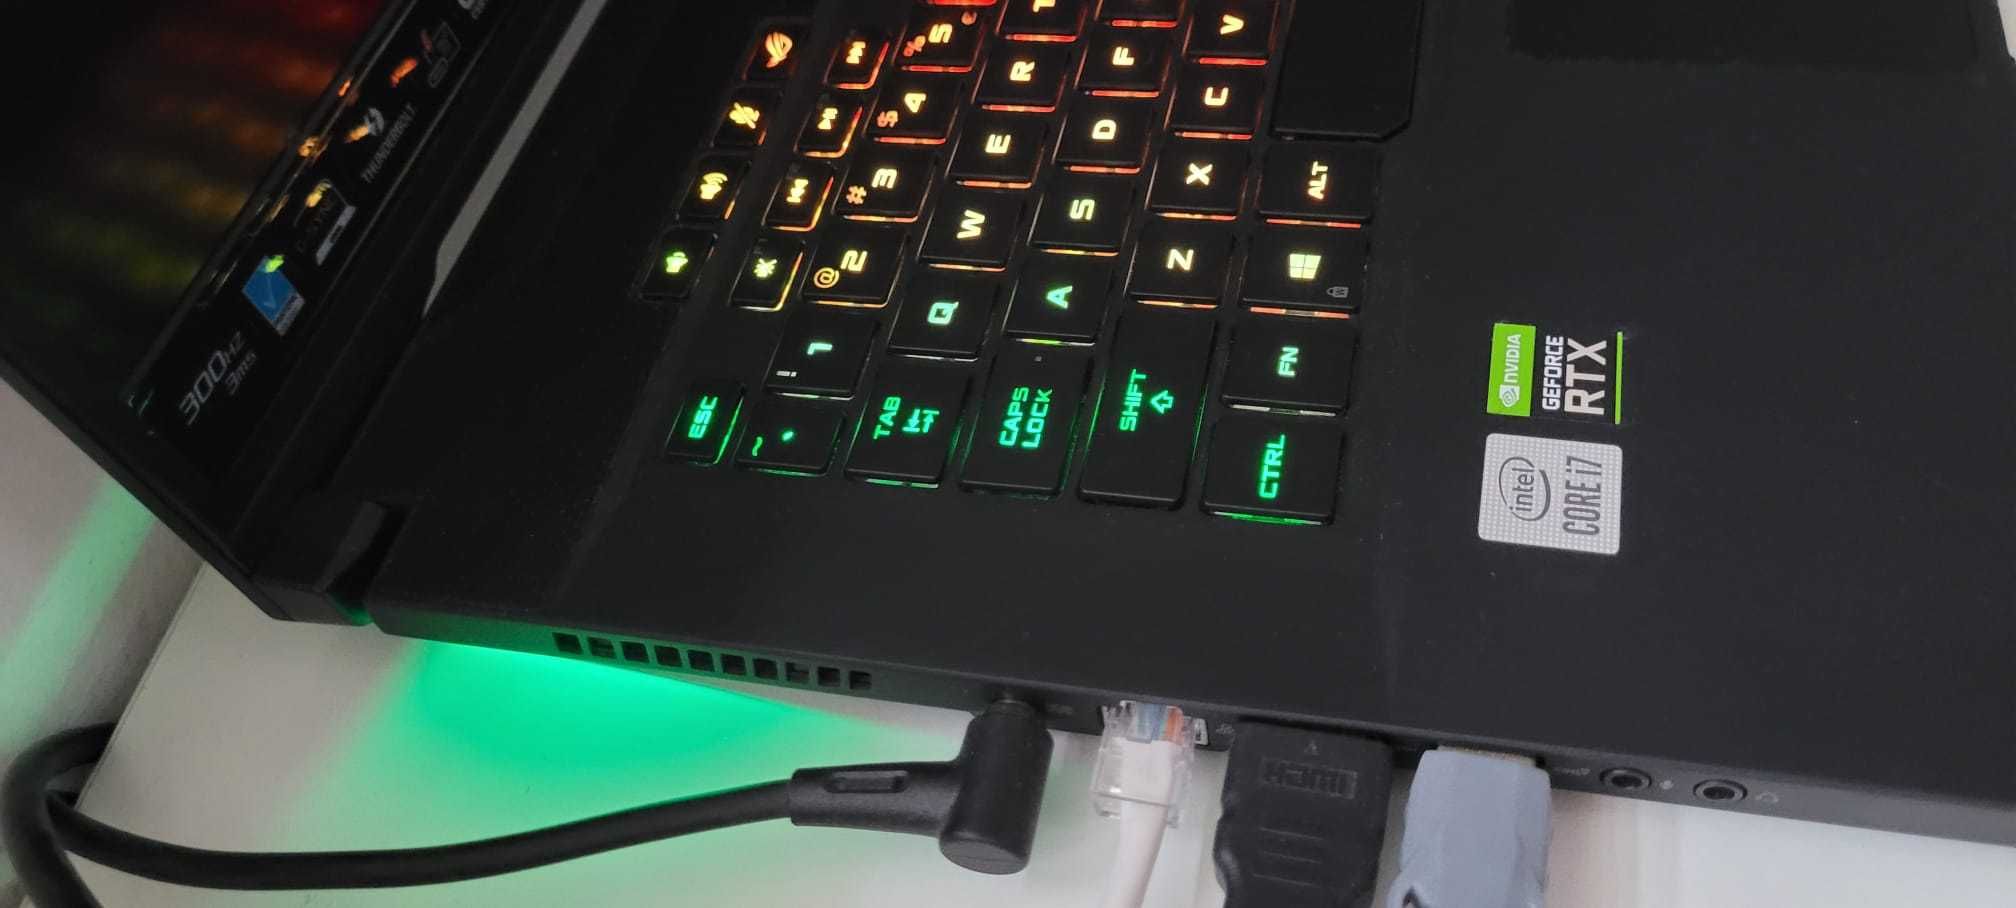 Vand Laptop Gaming ASUS ROG Zephyrus S15 + Cooler CADOU